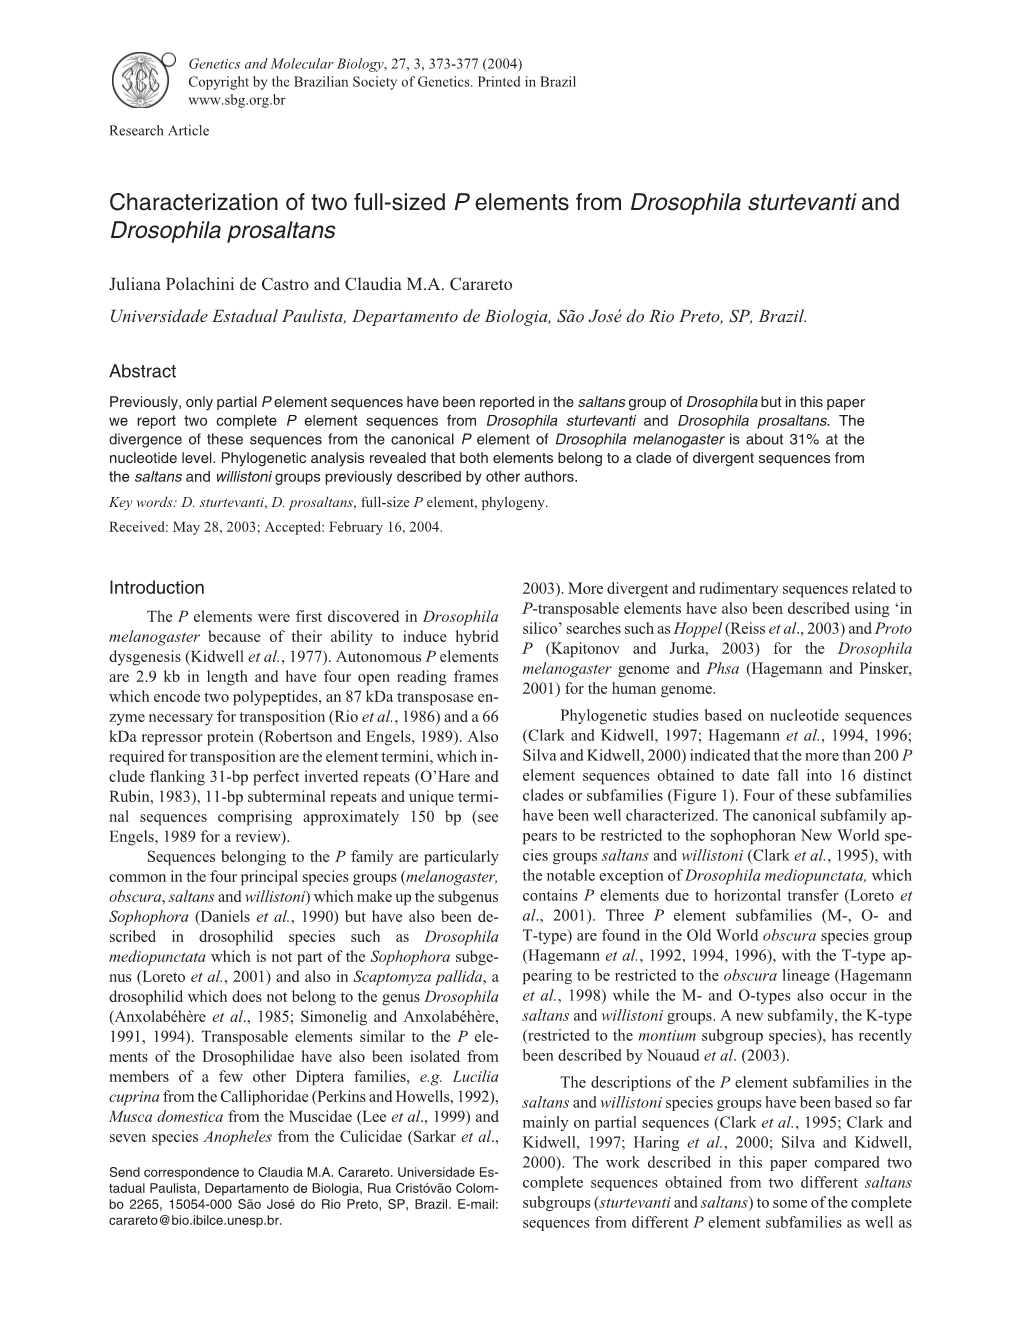 Characterization of Two Full-Sized P Elements from Drosophila Sturtevanti and Drosophila Prosaltans